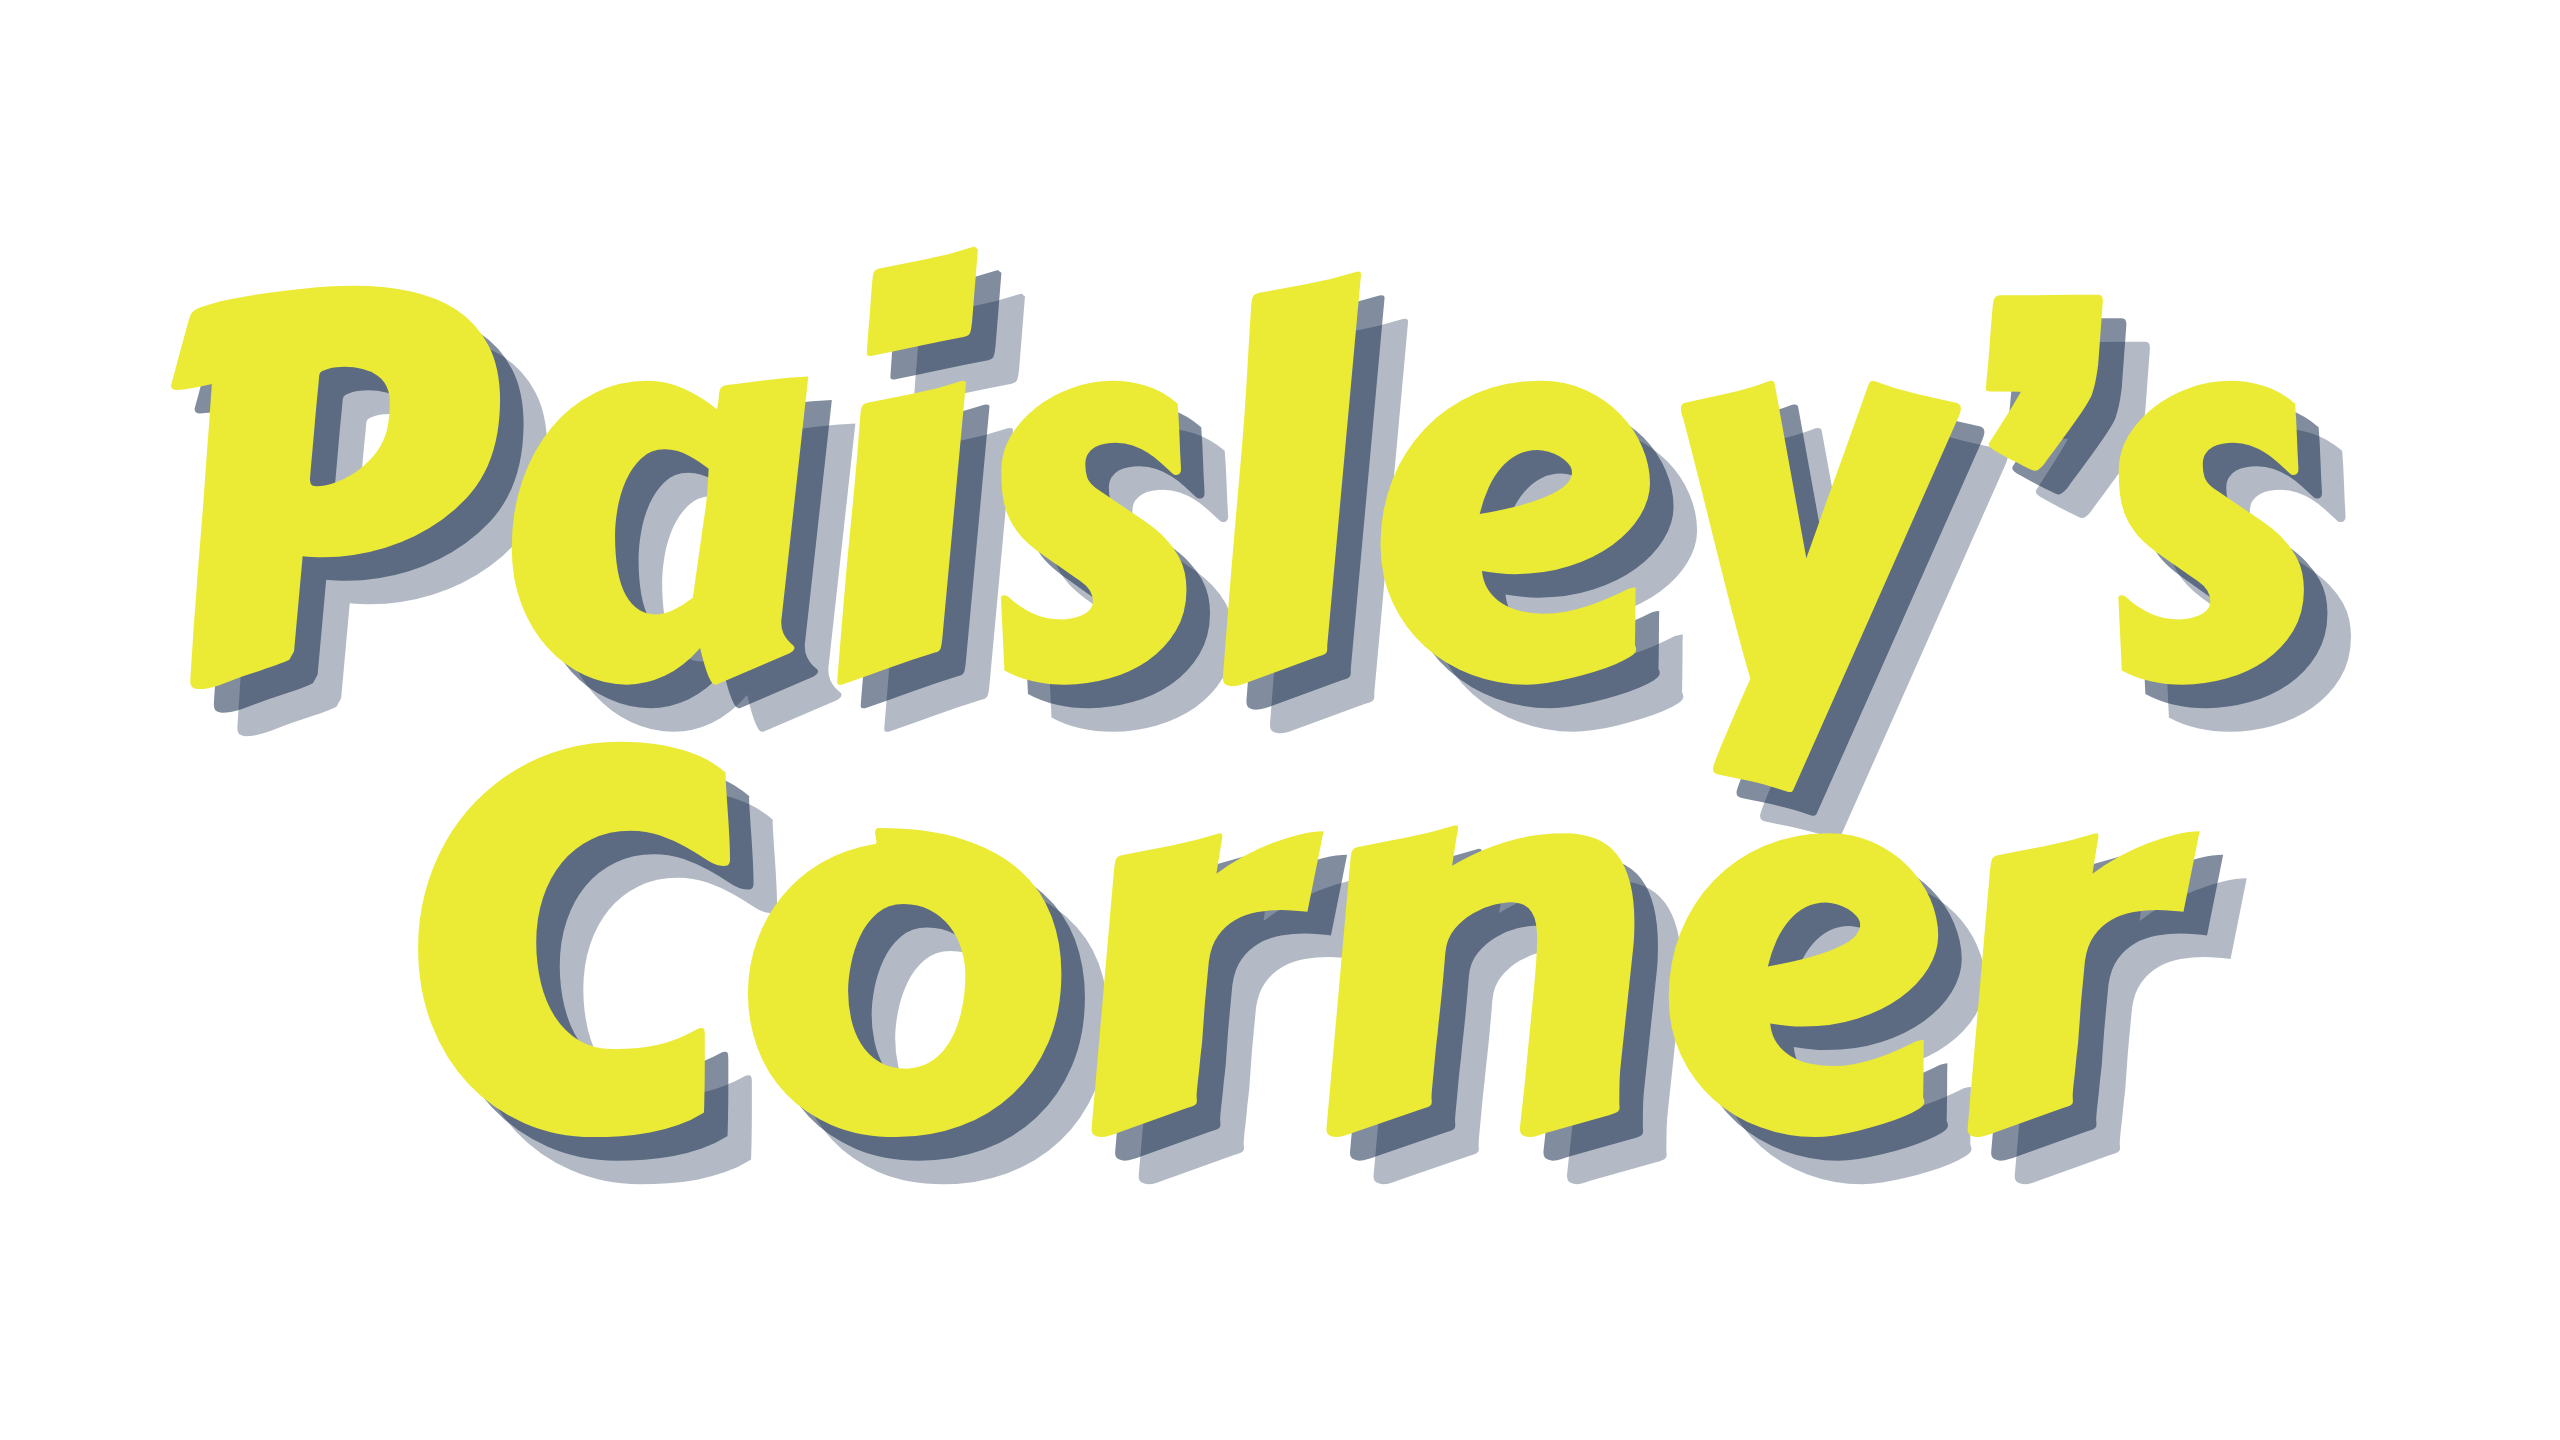 Love You Forever – Paisley's Corner